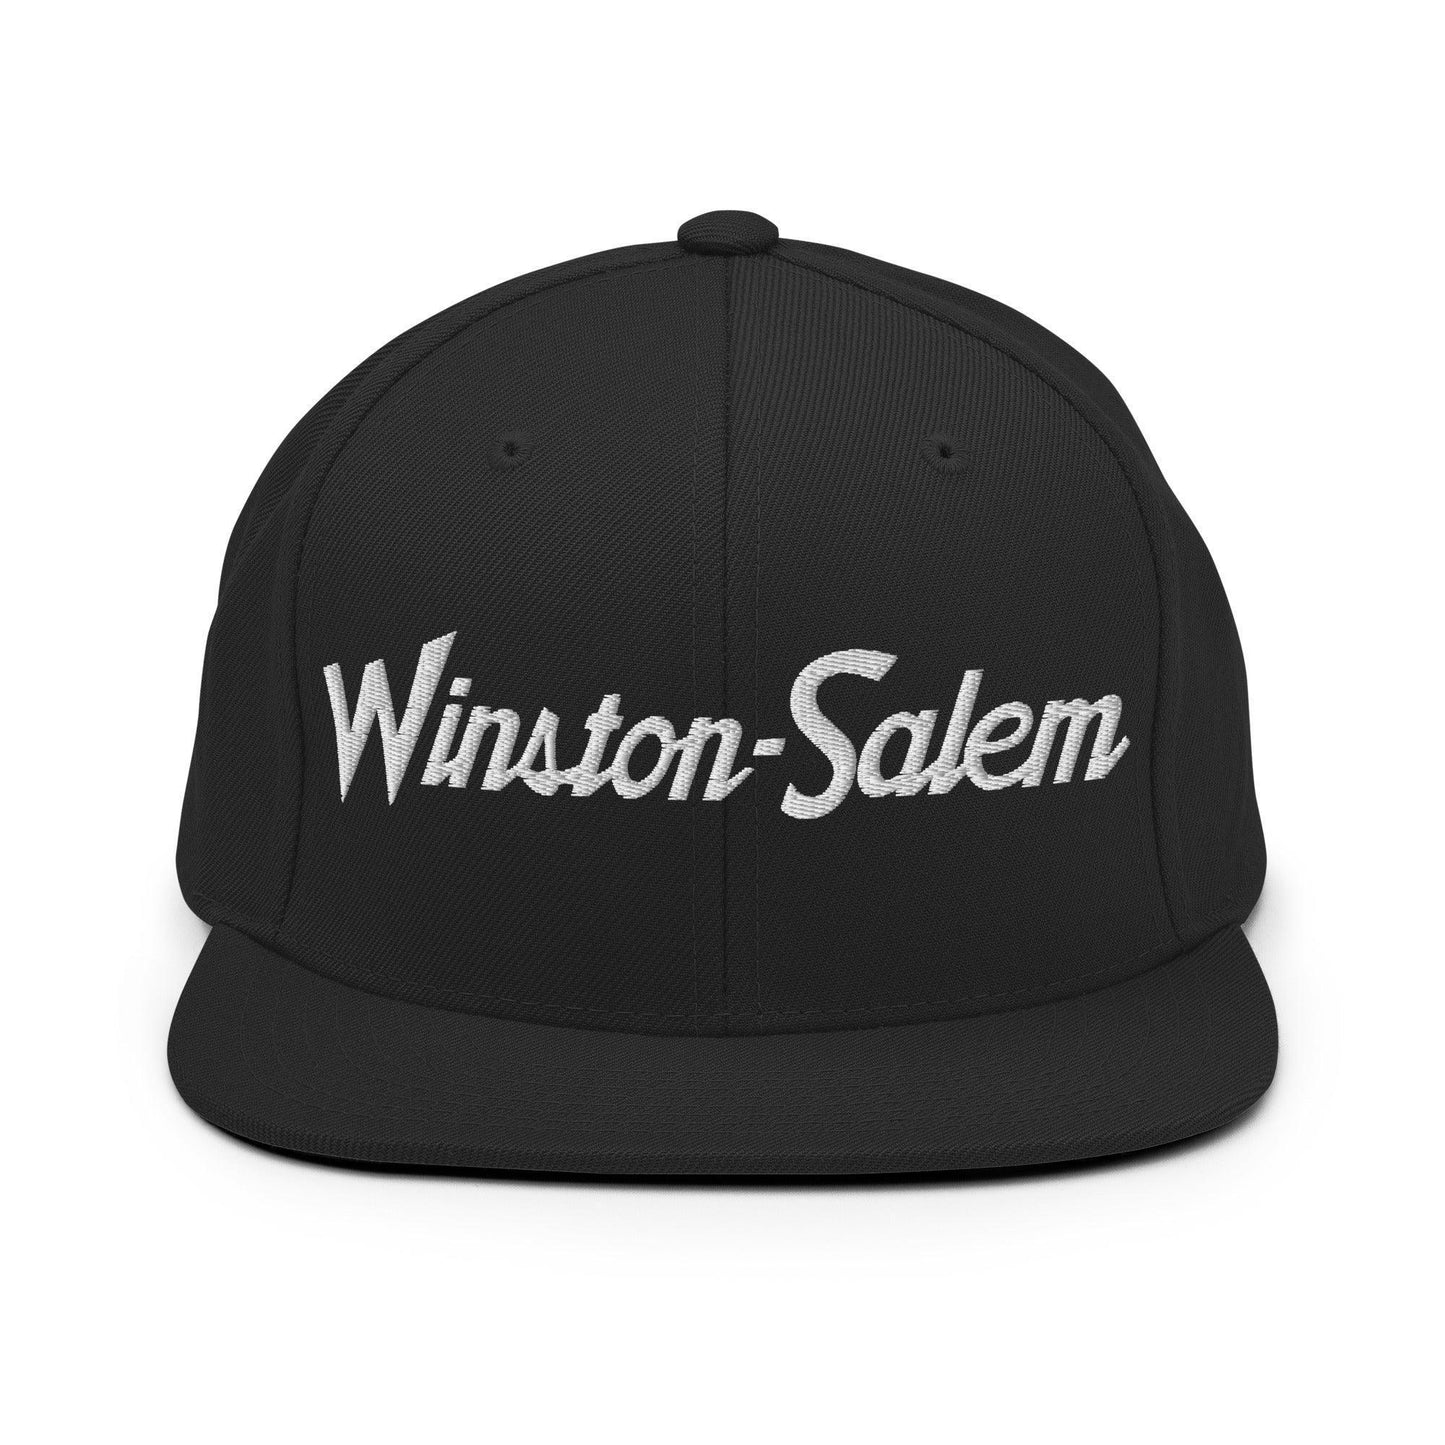 Winston-Salem Script Snapback Hat Black